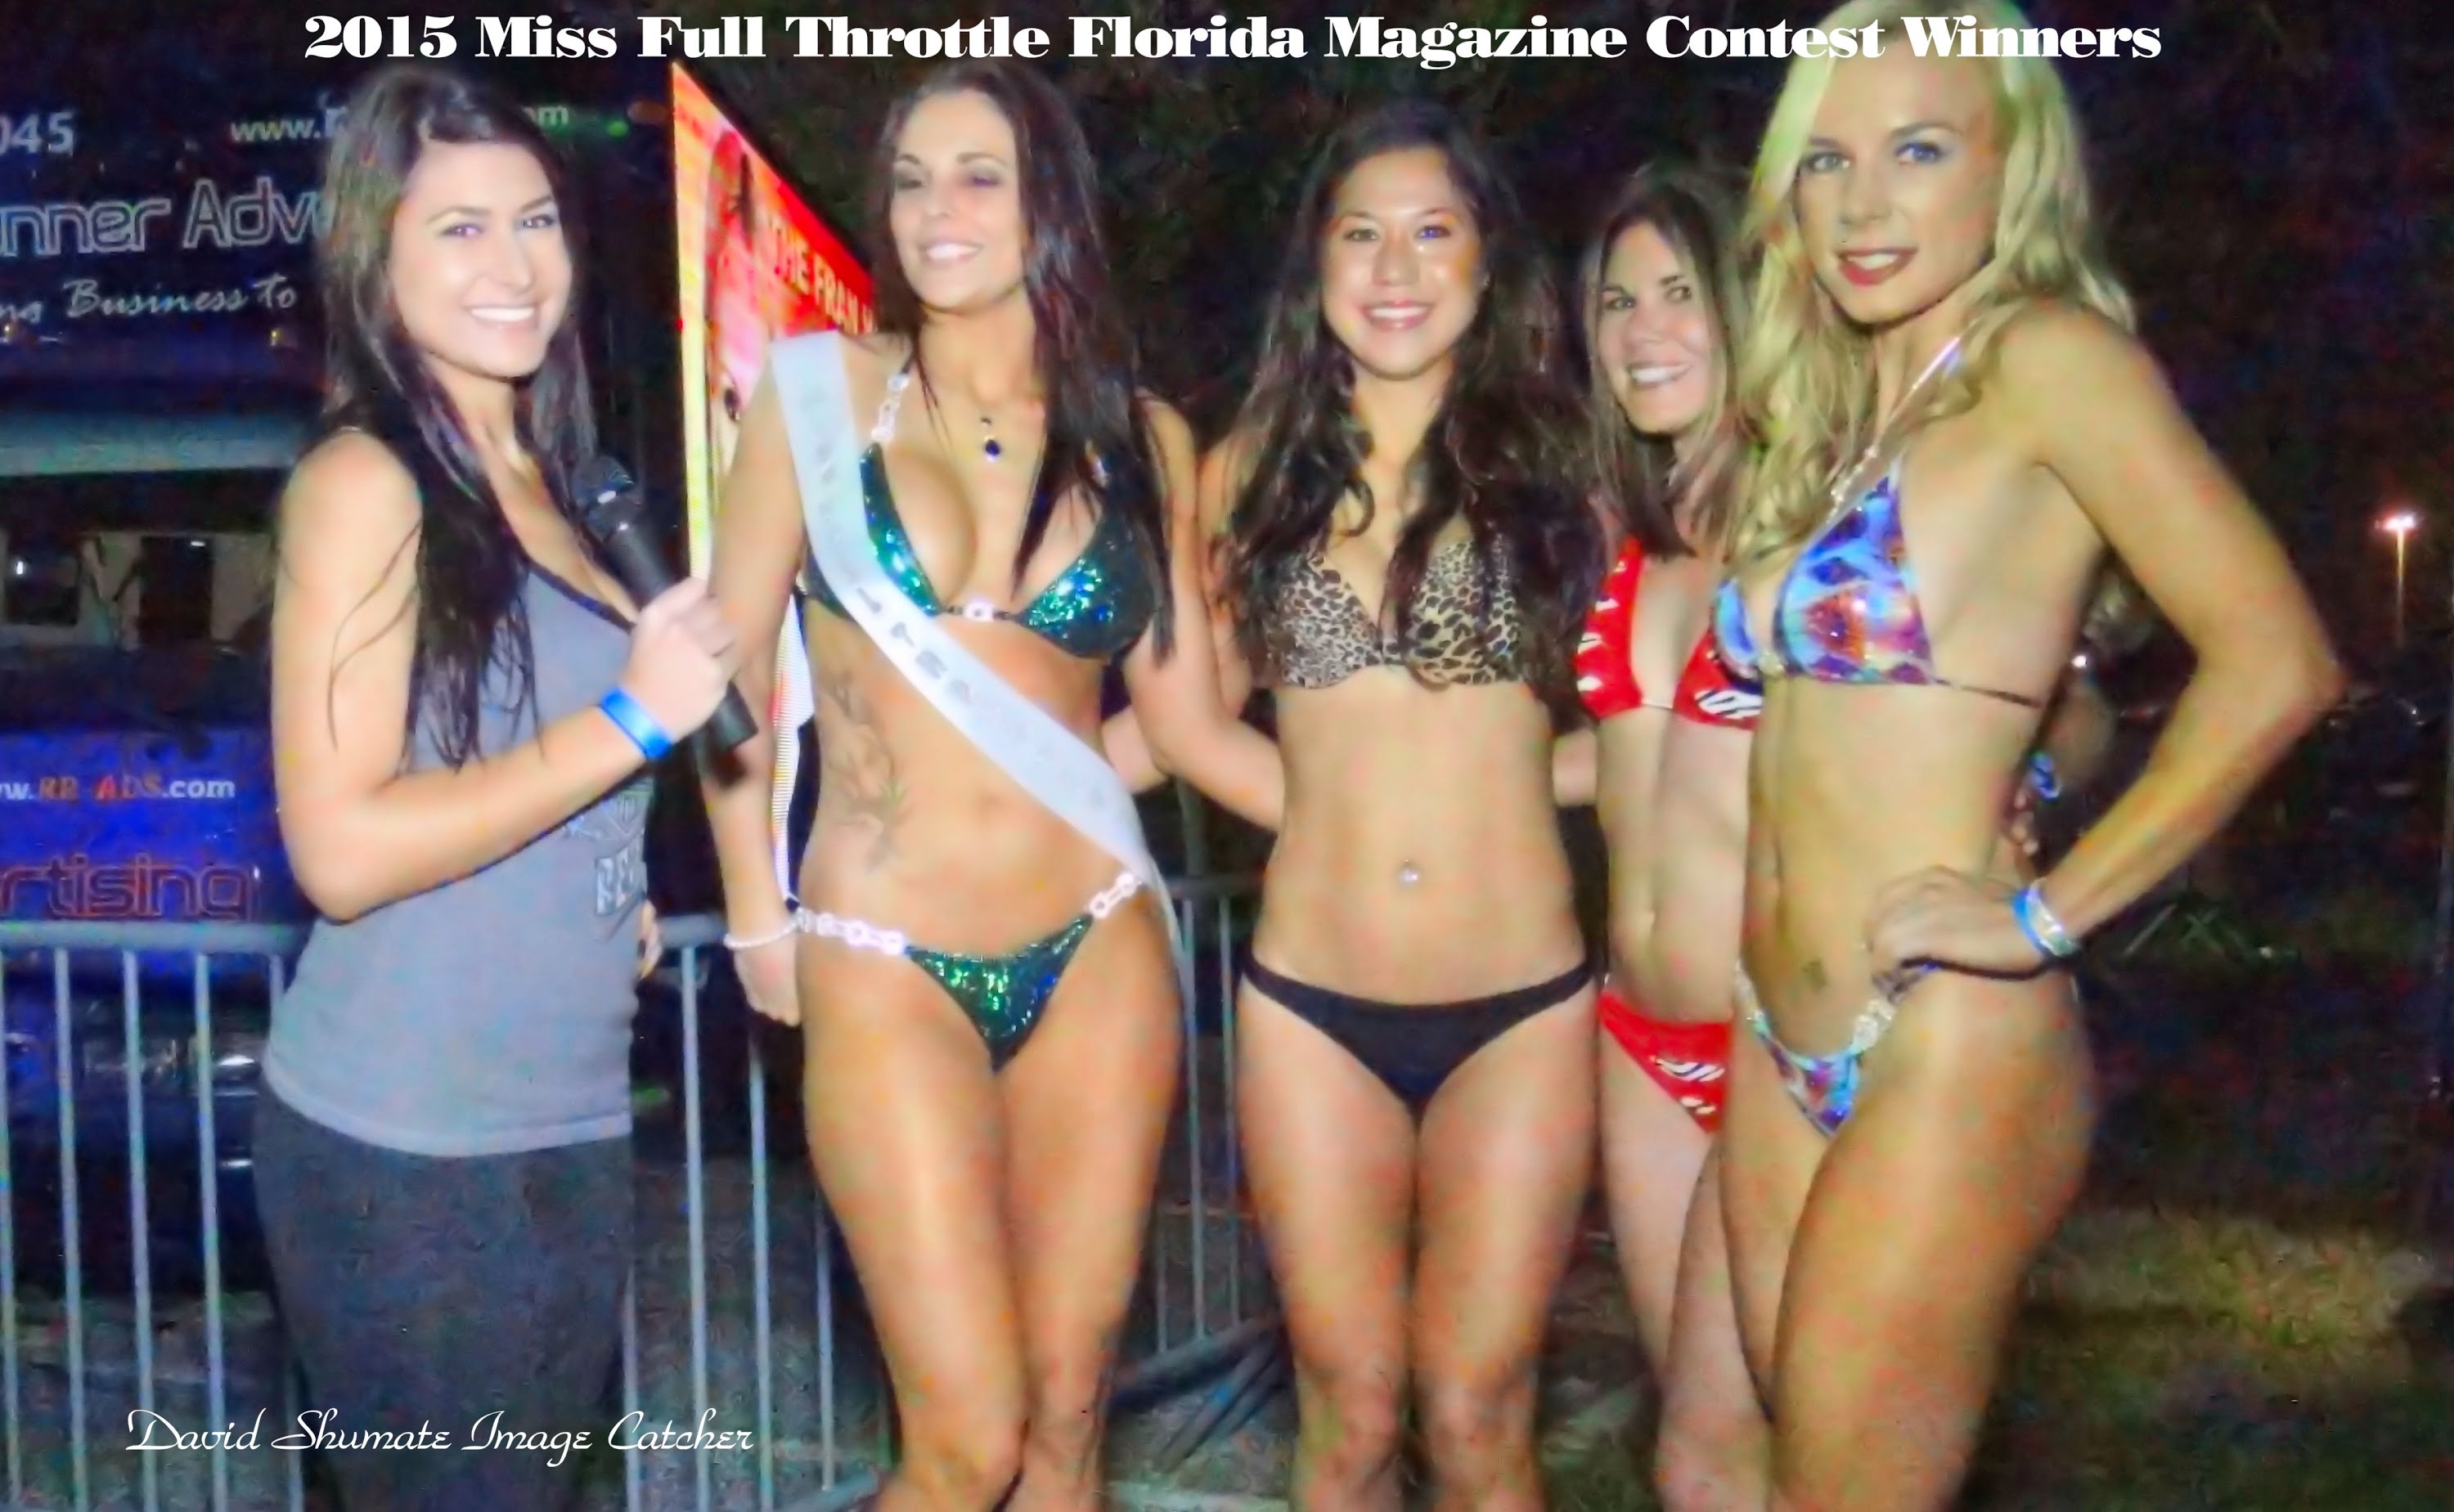 Beautiful Bikini Ladies Dress the stage at Miss Full Florida Throttle Conte...